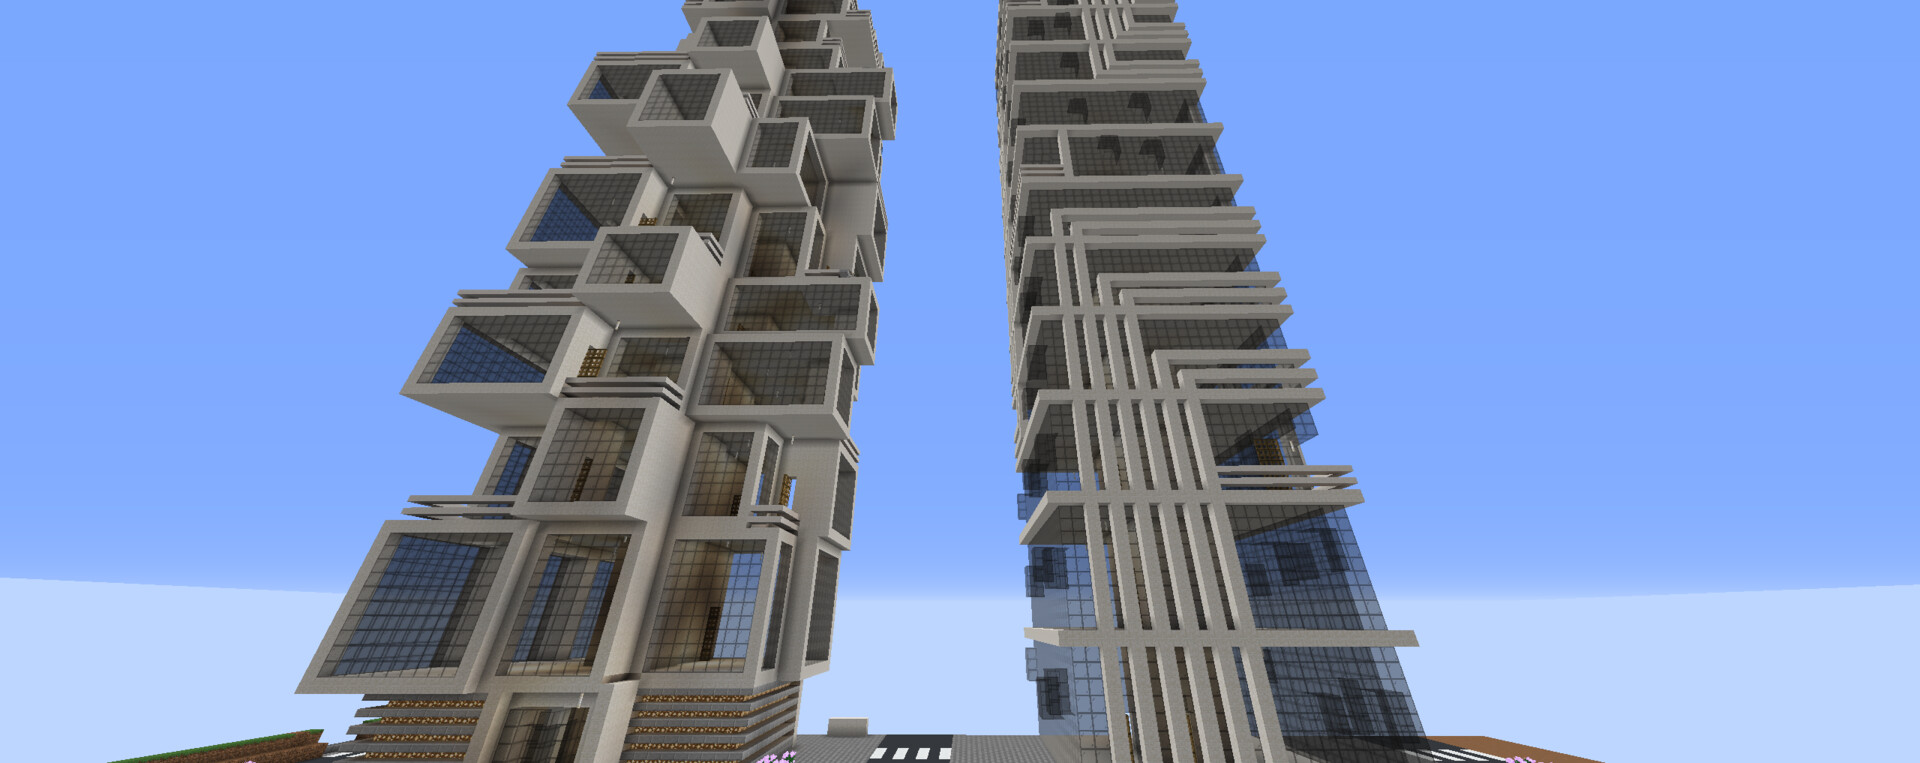 minecraft modern skyscraper